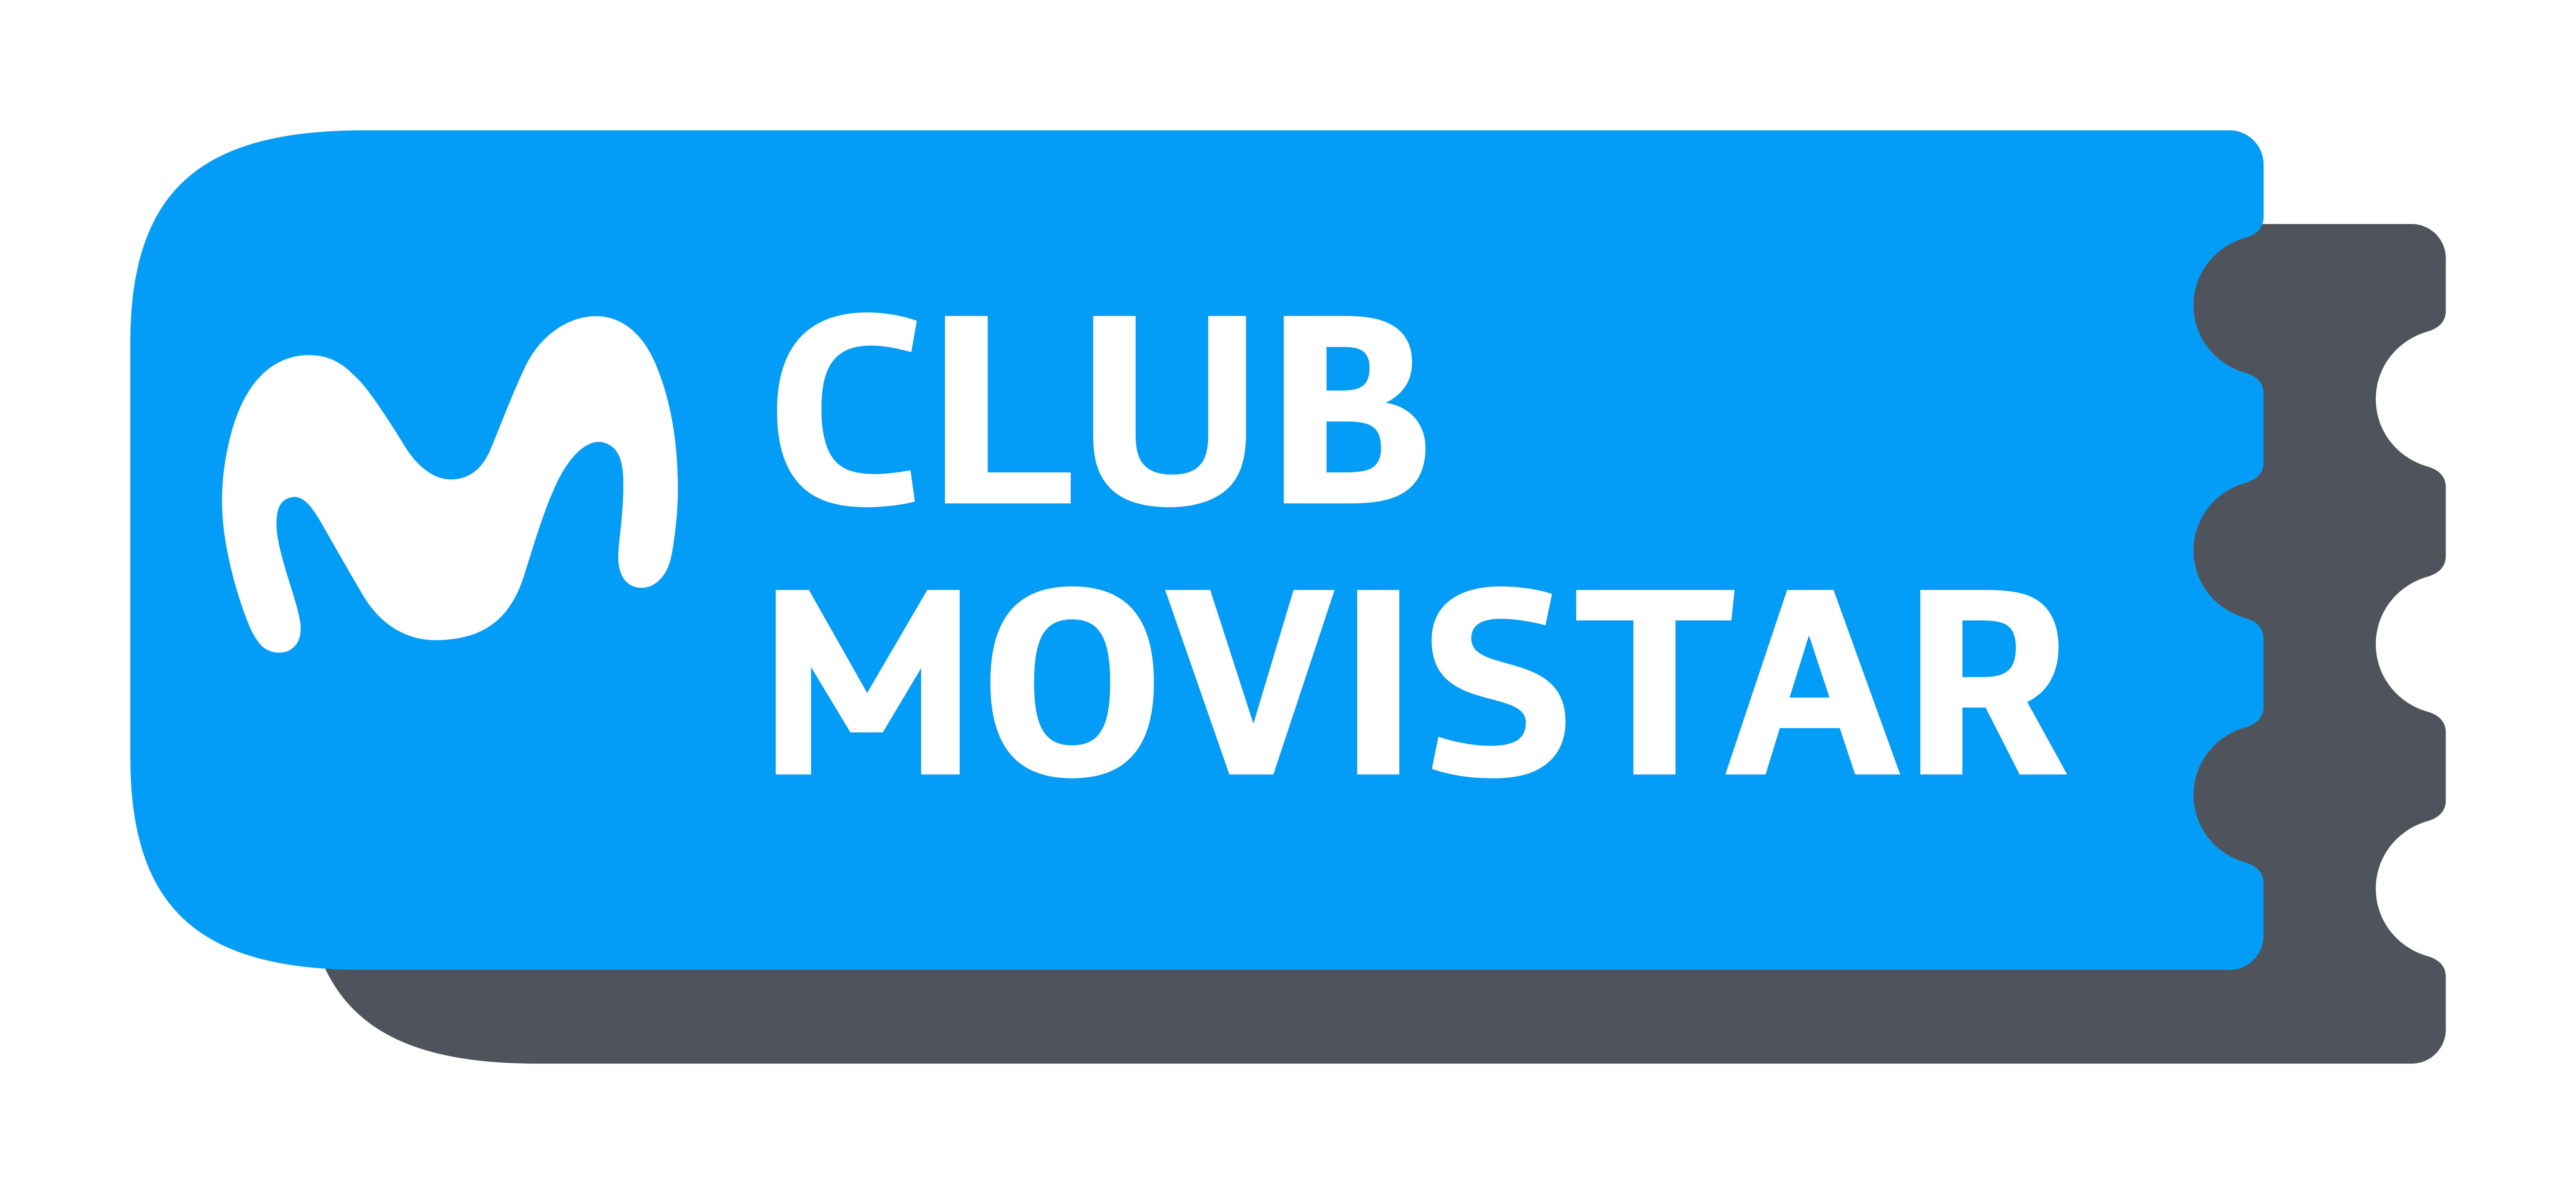 Logotipo Club Movistar 